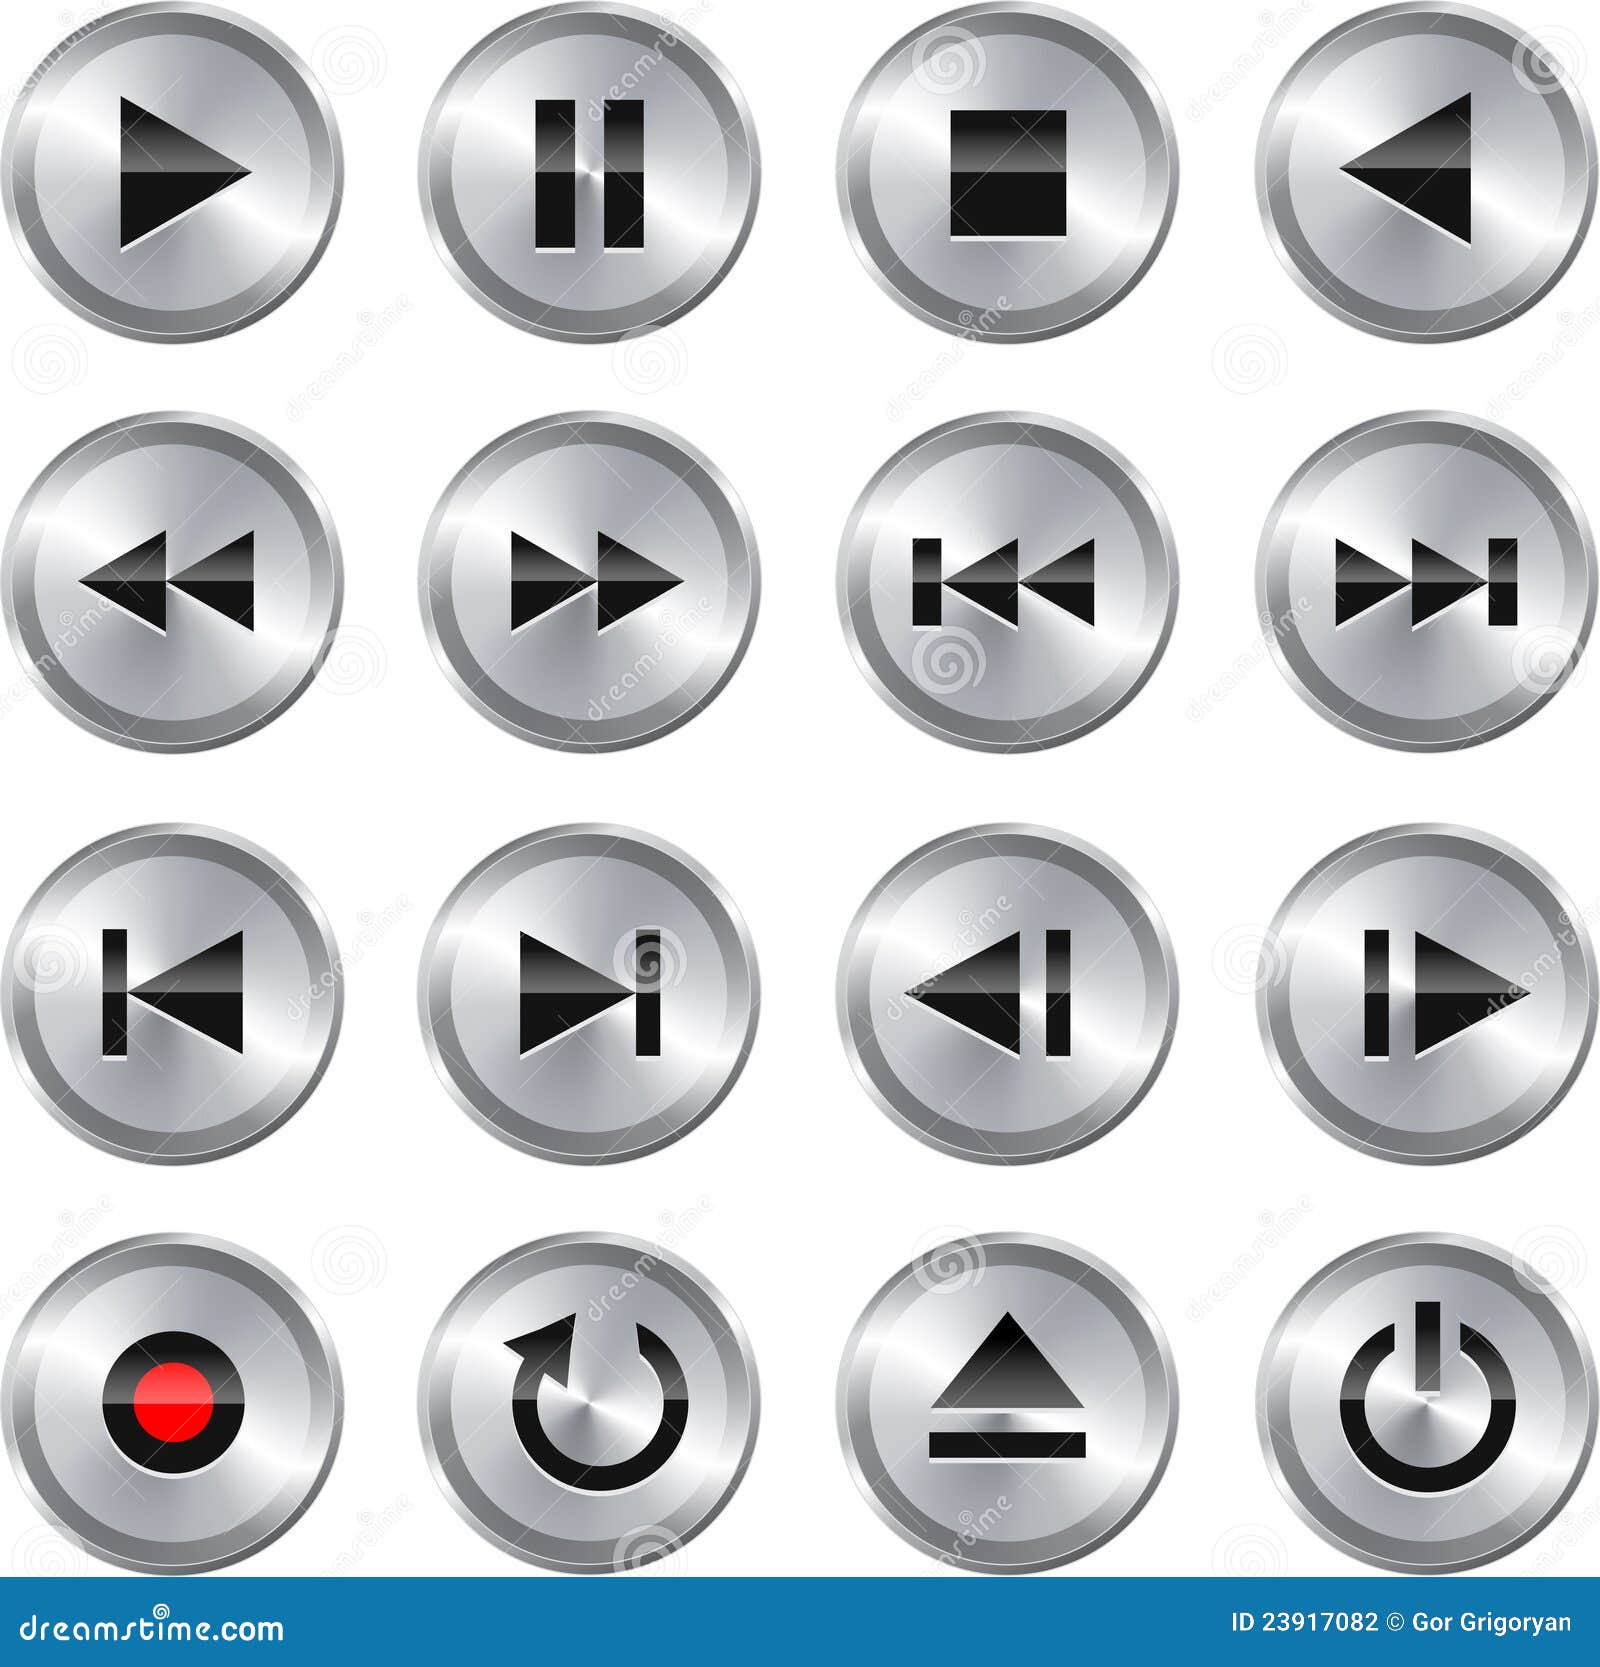 multimedia control icon/button set